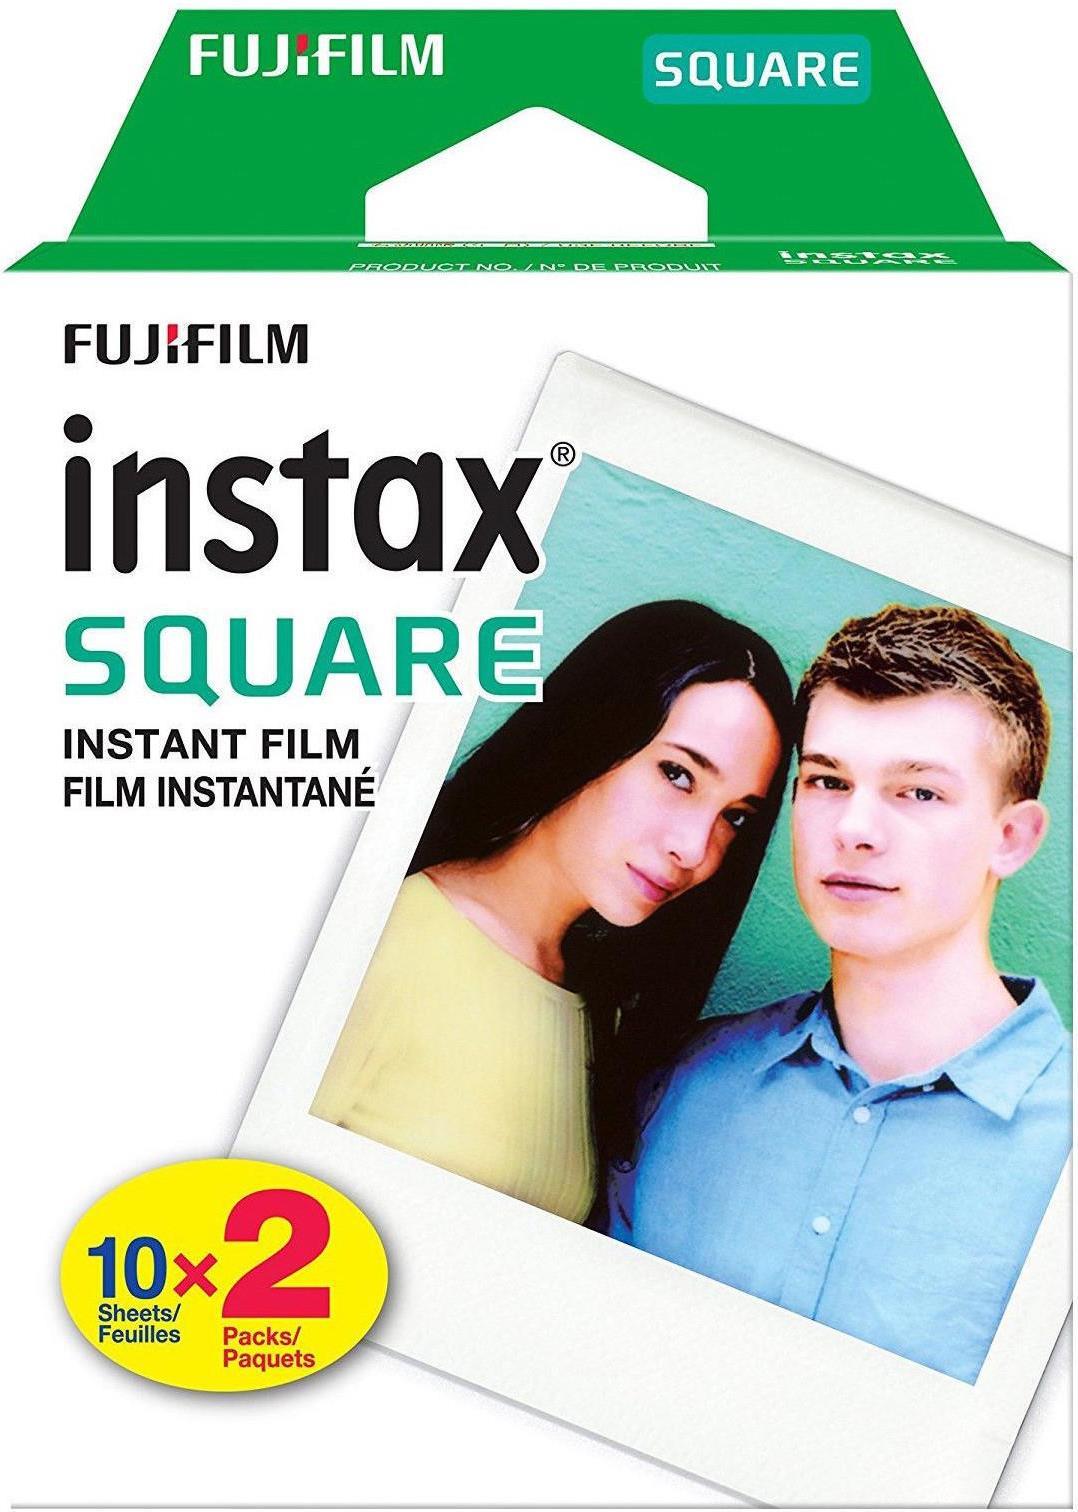 FUJIFILM 1x2 Instax Square Film white frame